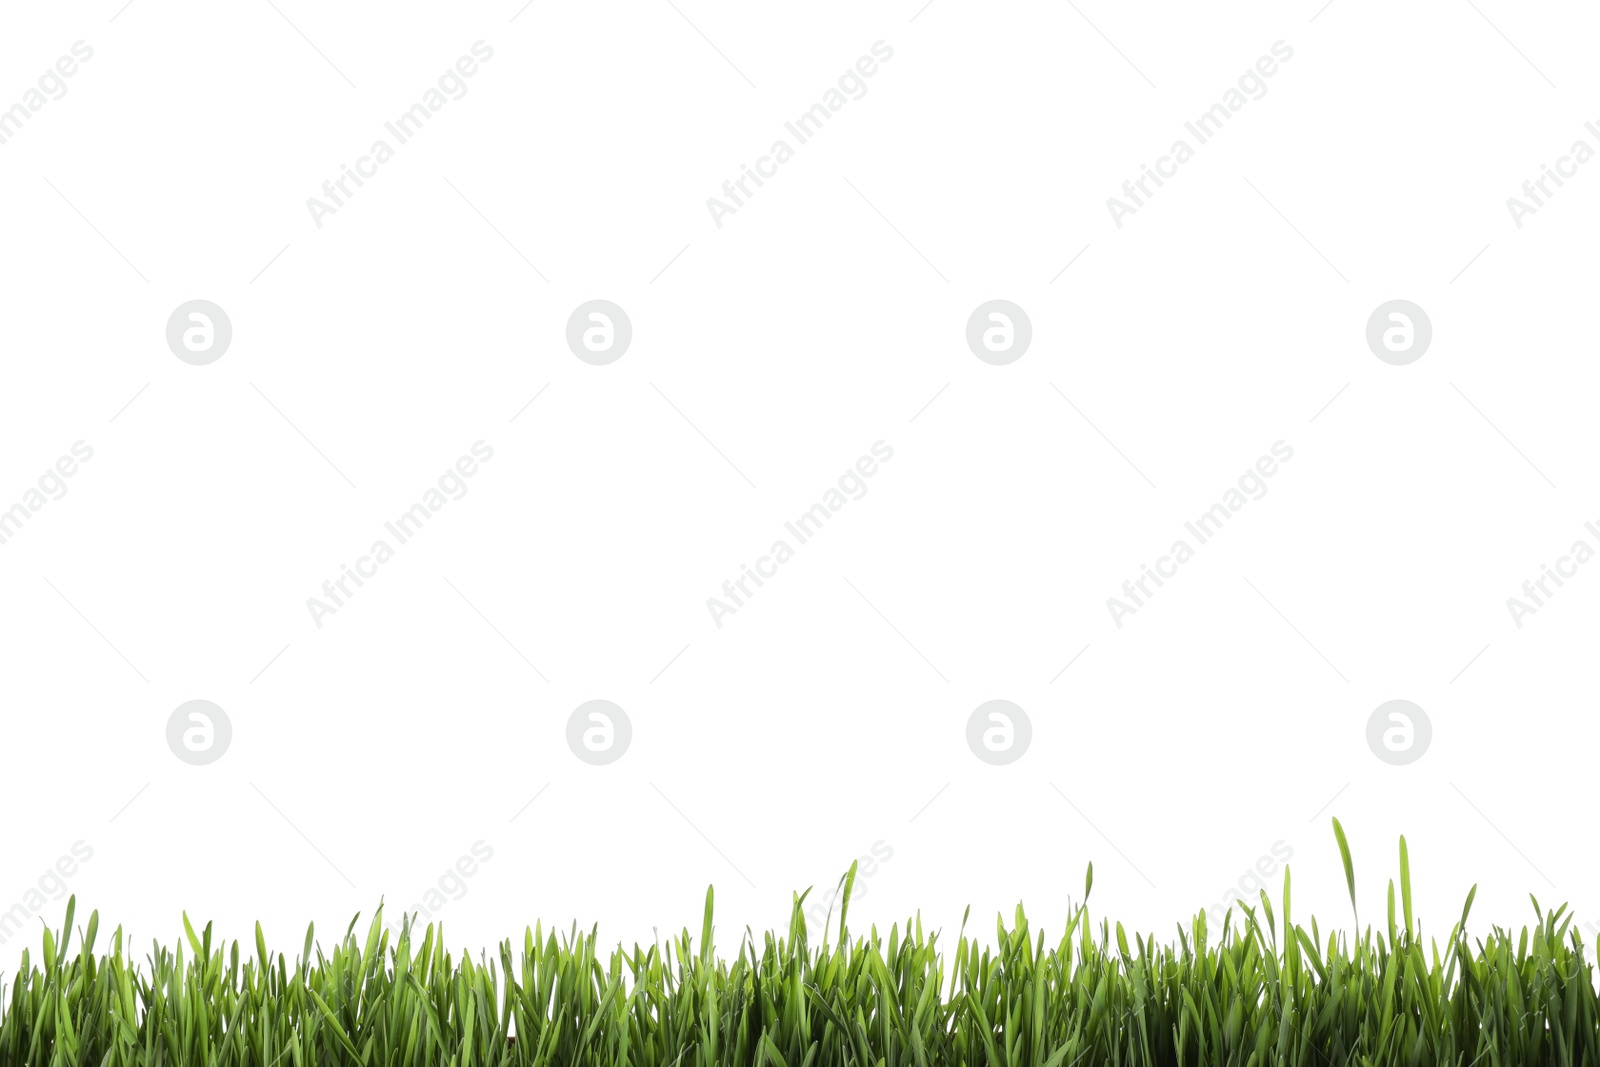 Photo of Fresh green grass isolated on white. Spring season